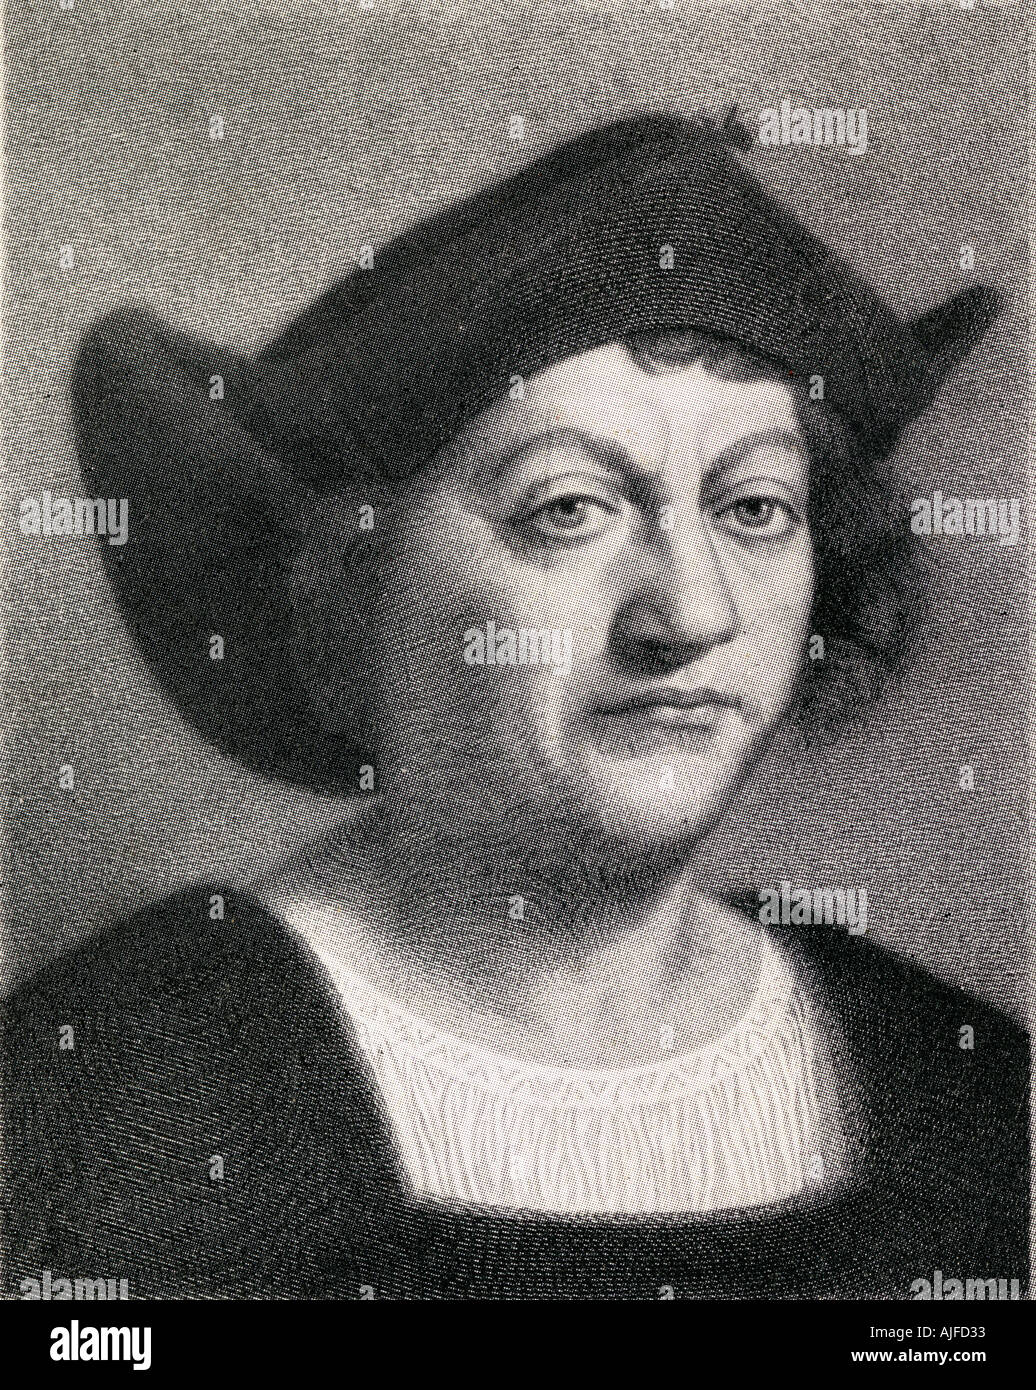 Christopher Columbus, 1451-1506. Italian explorer, navigator, colonizer and discoverer of America. Stock Photo